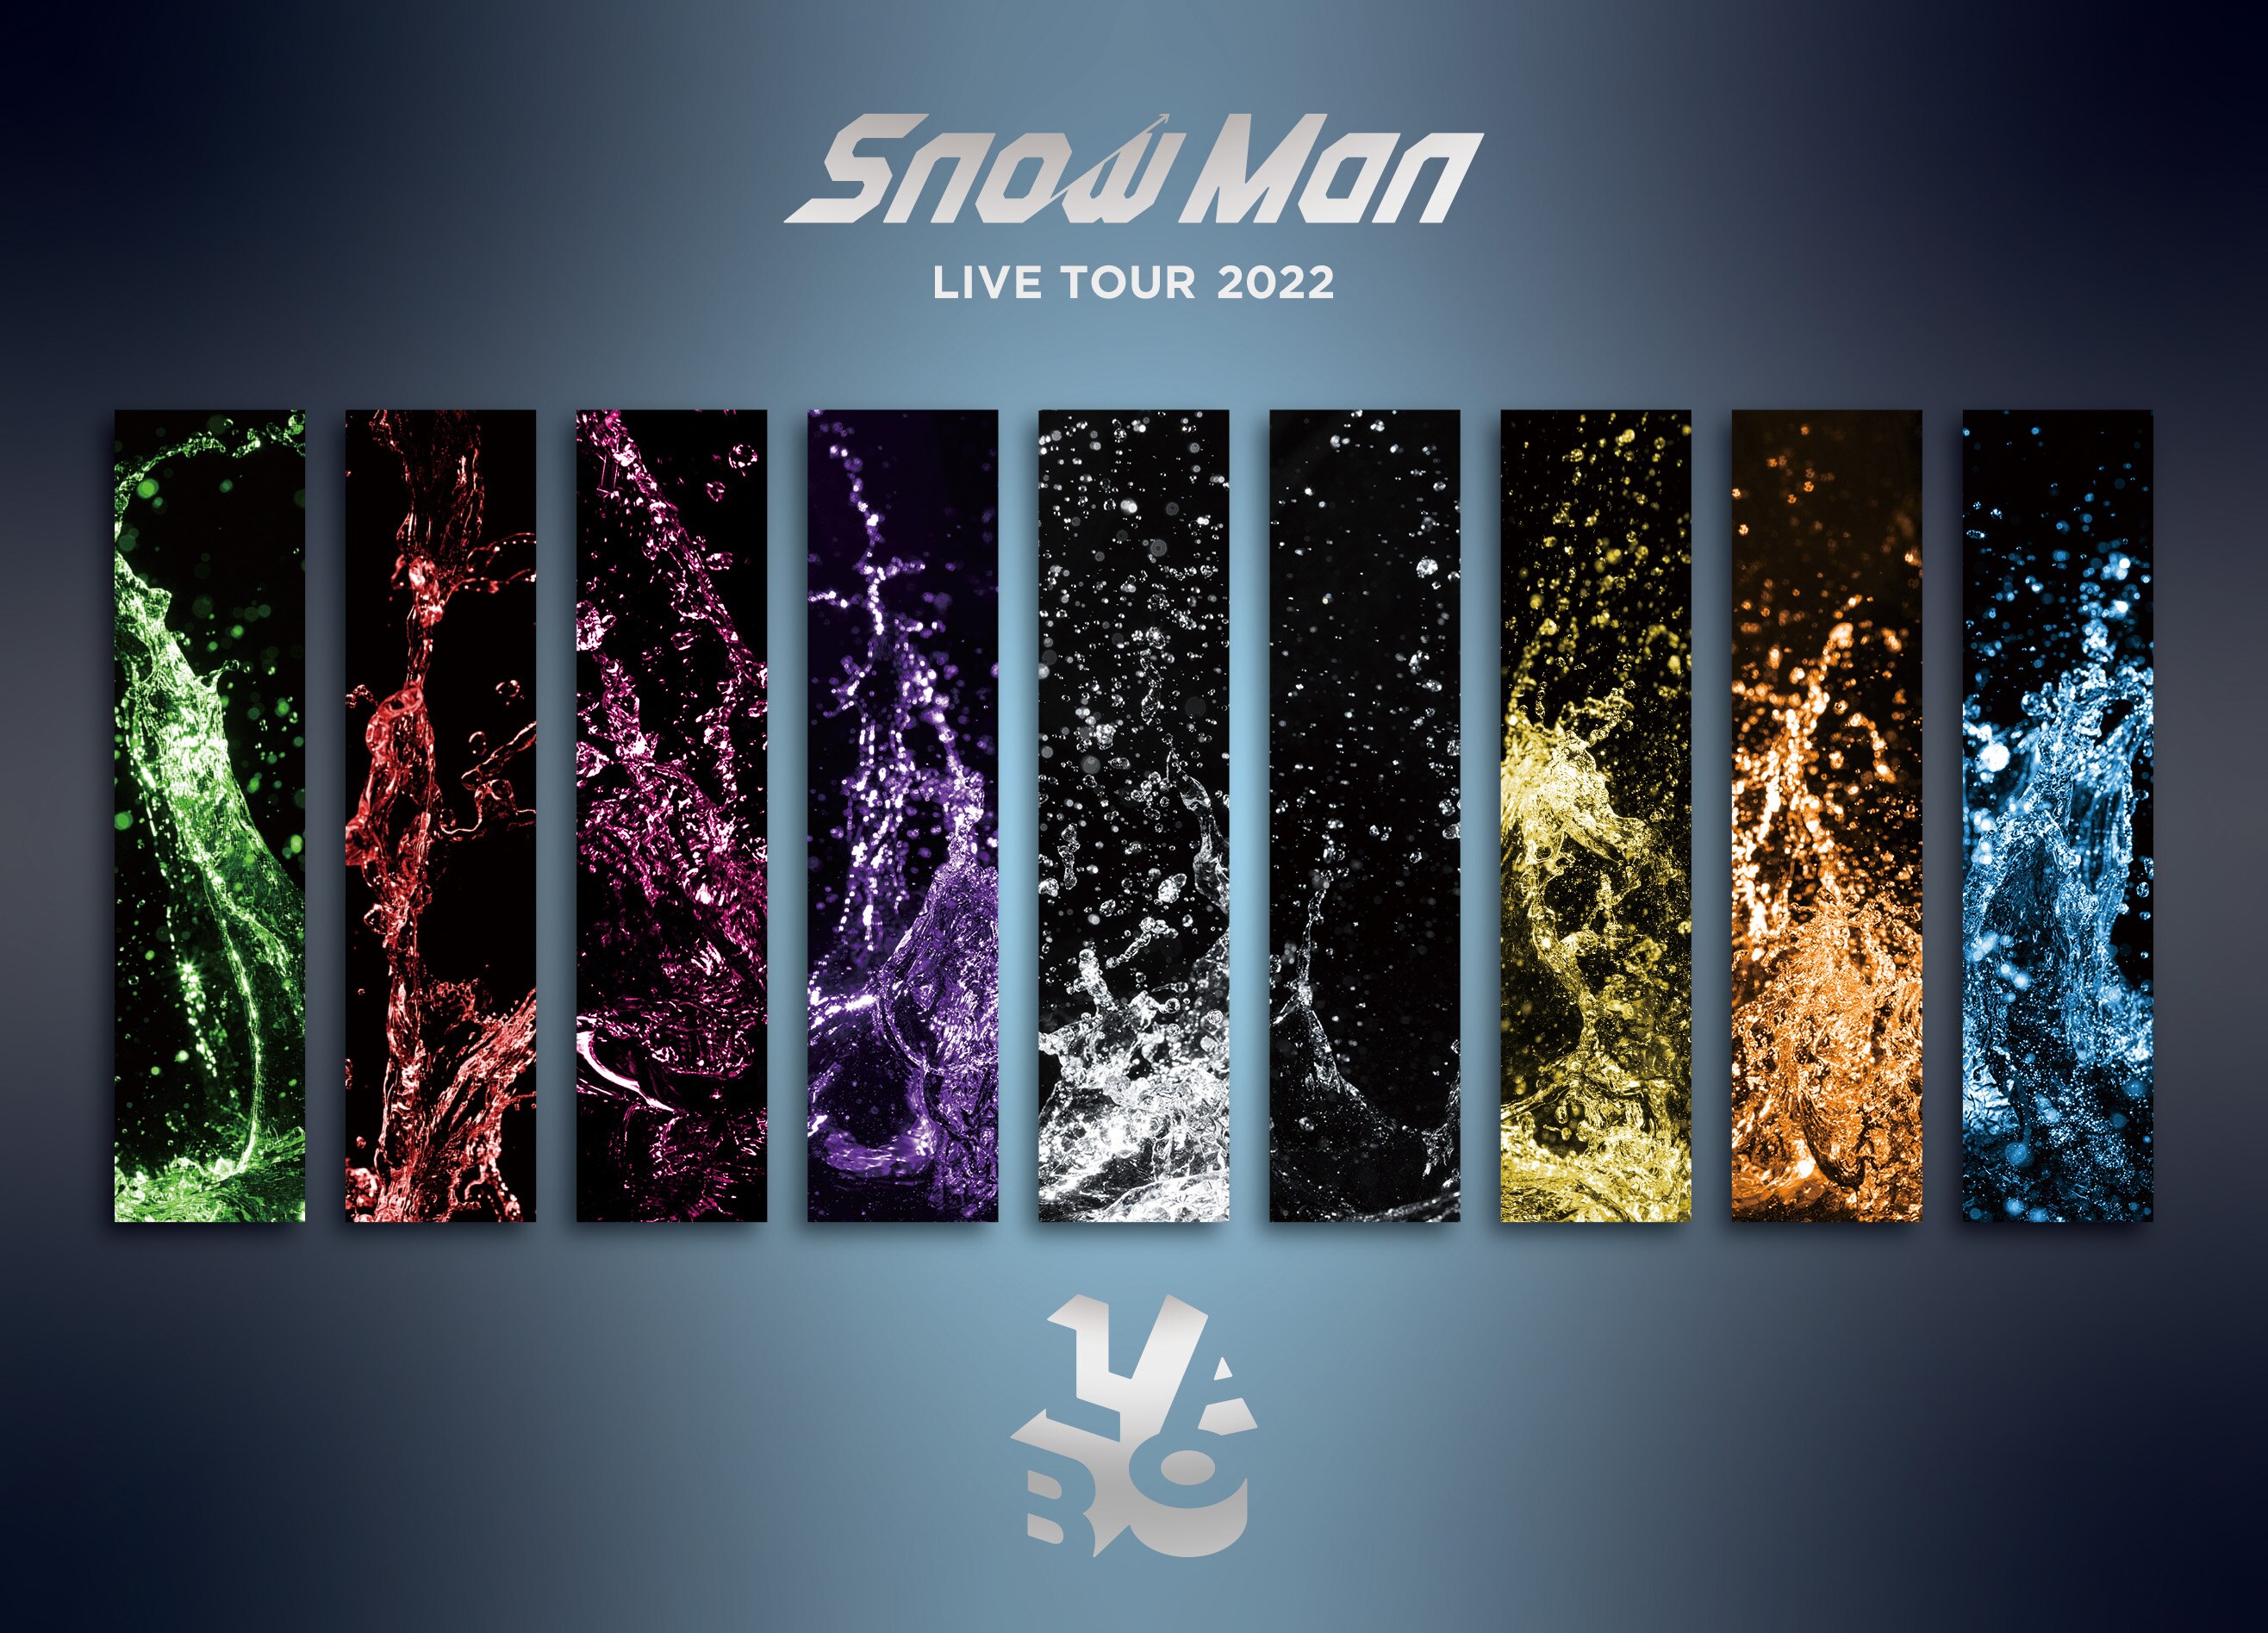 SnowMan LIVE TOUR 2022 Labo. 初回盤DVDスノラボ